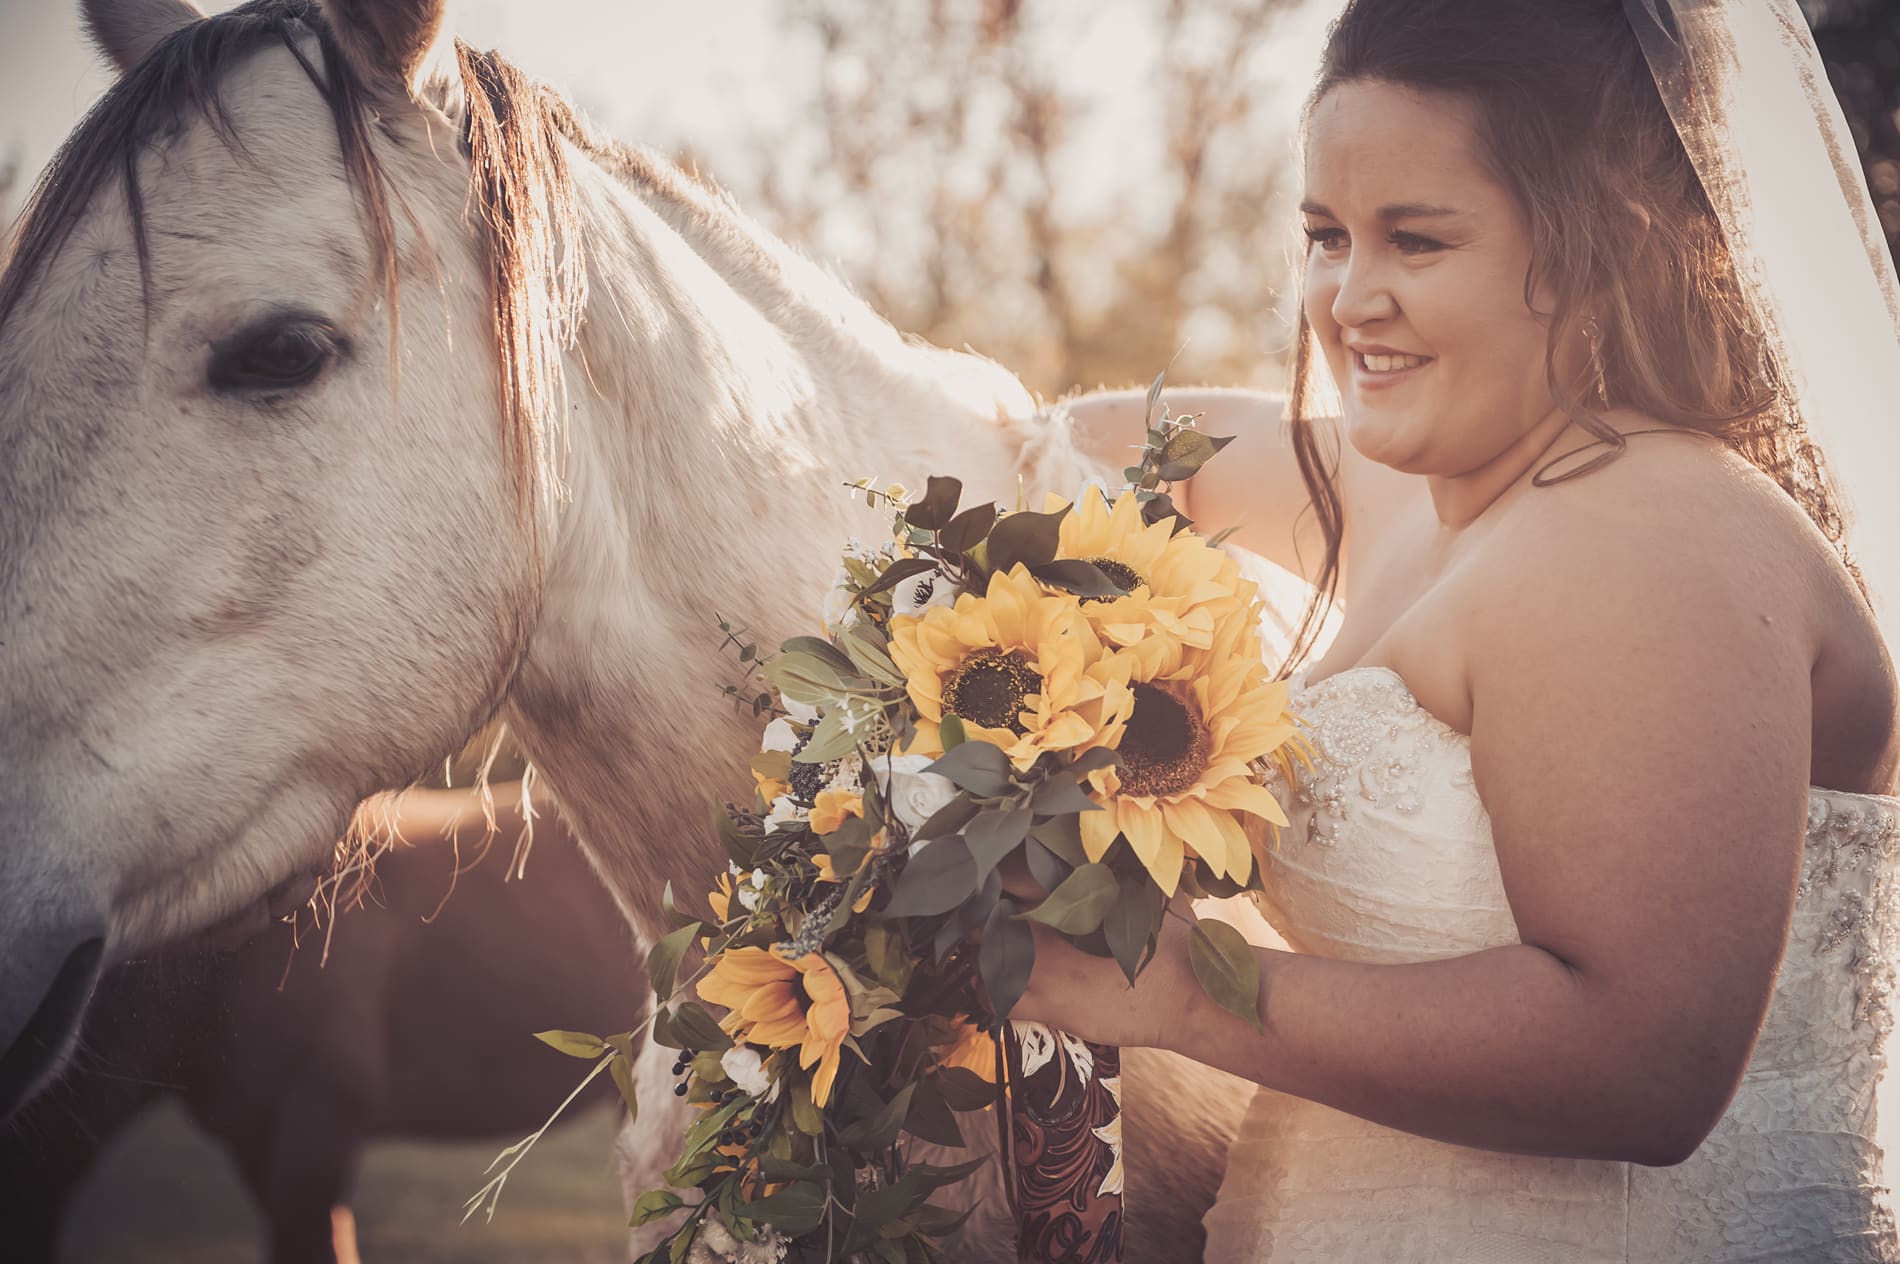 Family & Wedding Photographer, Bride near horse with sunflowers